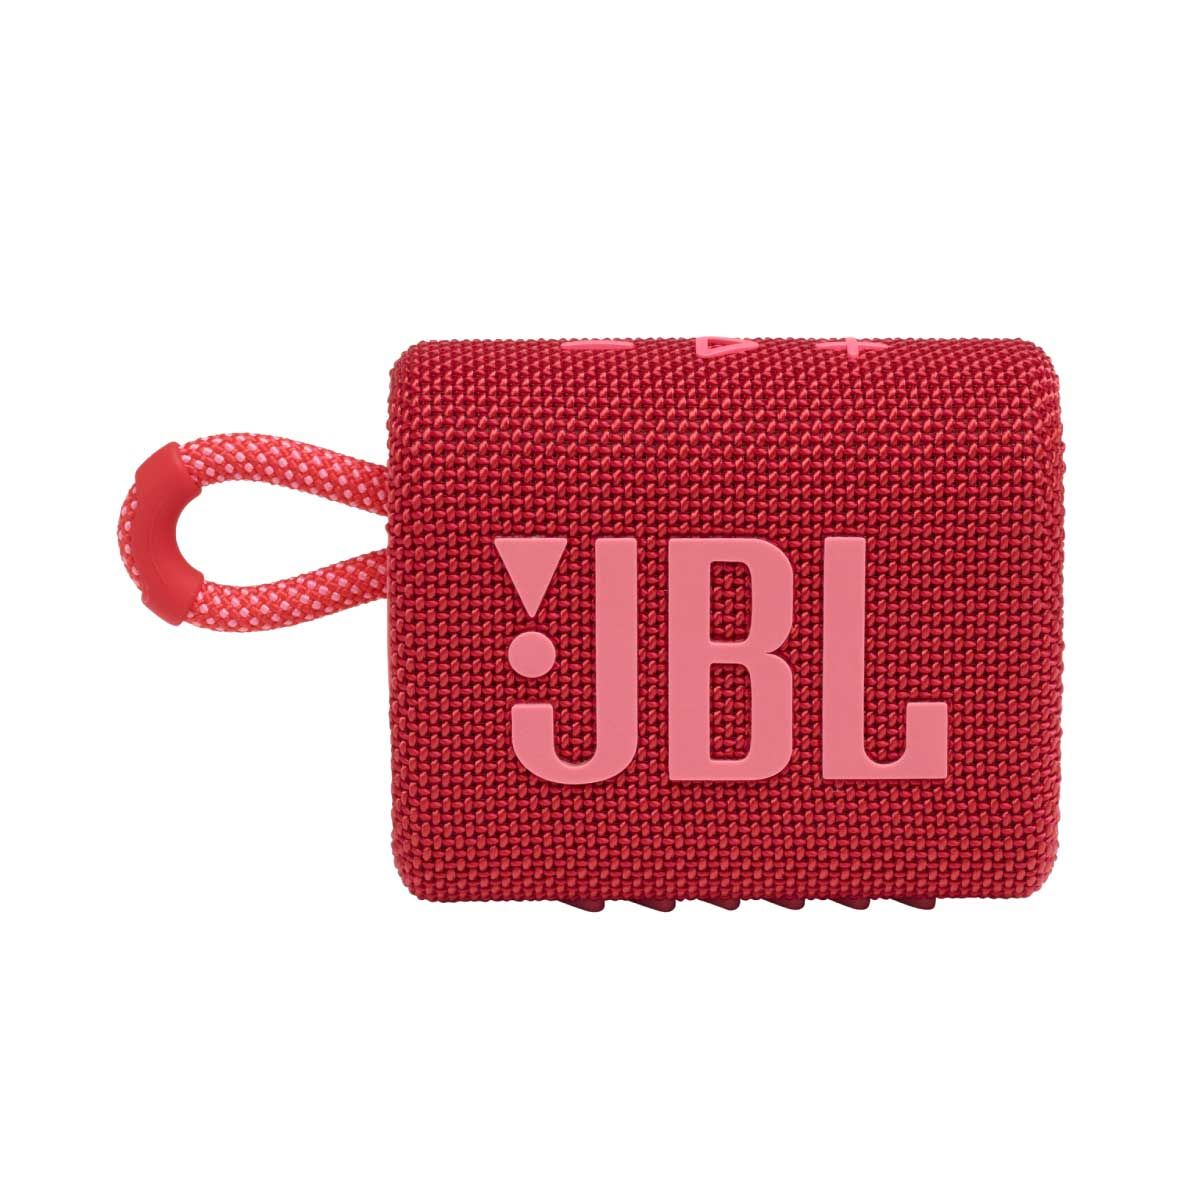 JBL ลำโพงพกพาบลูทูธ รุ่น GO3/RD สีแดง กันน้ำ/กันฝุ่น